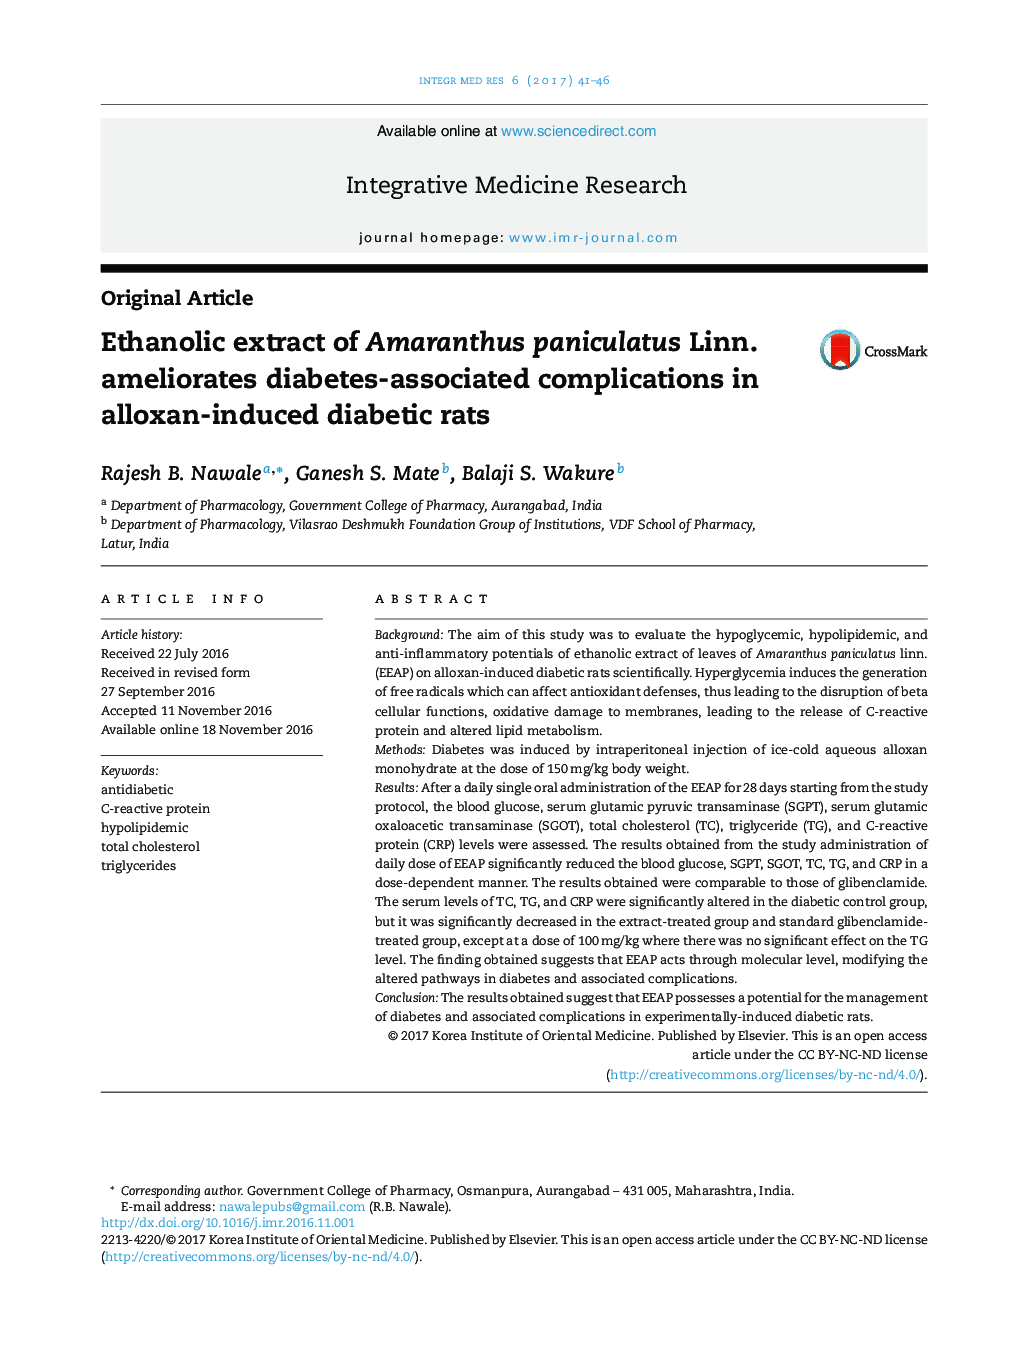 Ethanolic extract of Amaranthus paniculatus Linn. ameliorates diabetes-associated complications in alloxan-induced diabetic rats